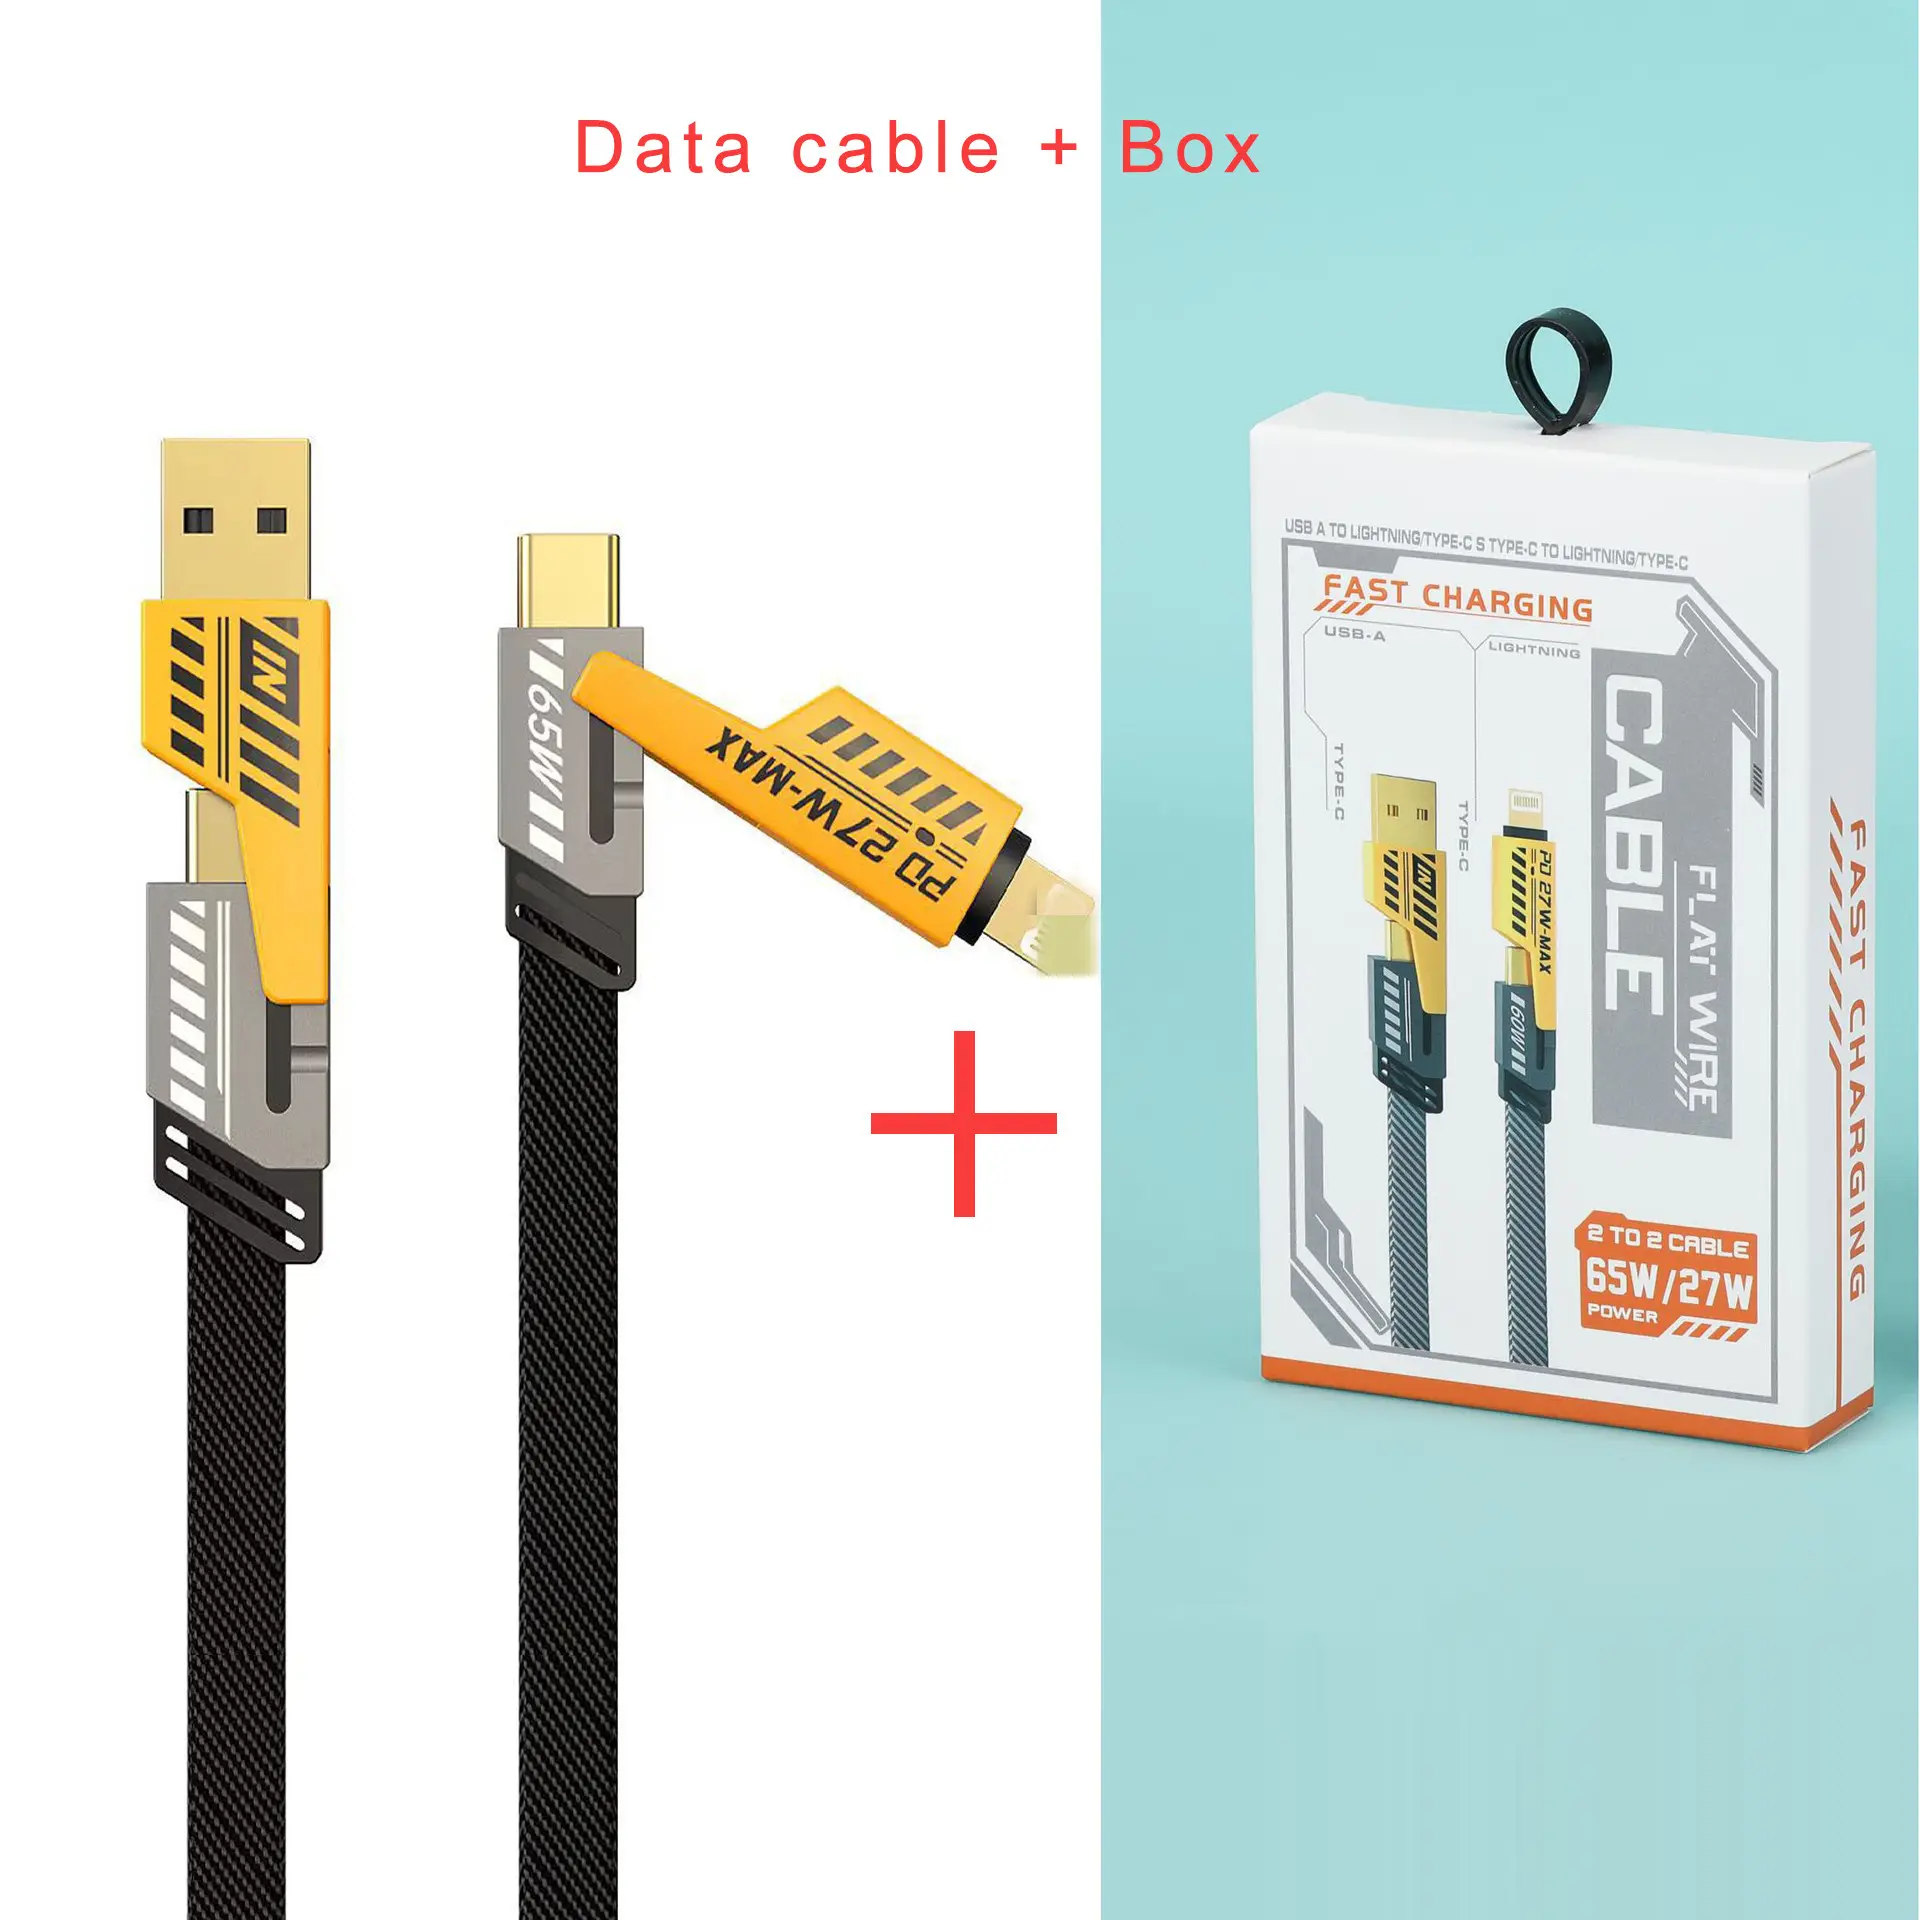 Kabel pengisi daya USB 4 in 1, kabel Data multifungsi pengisian daya cepat untuk ponsel